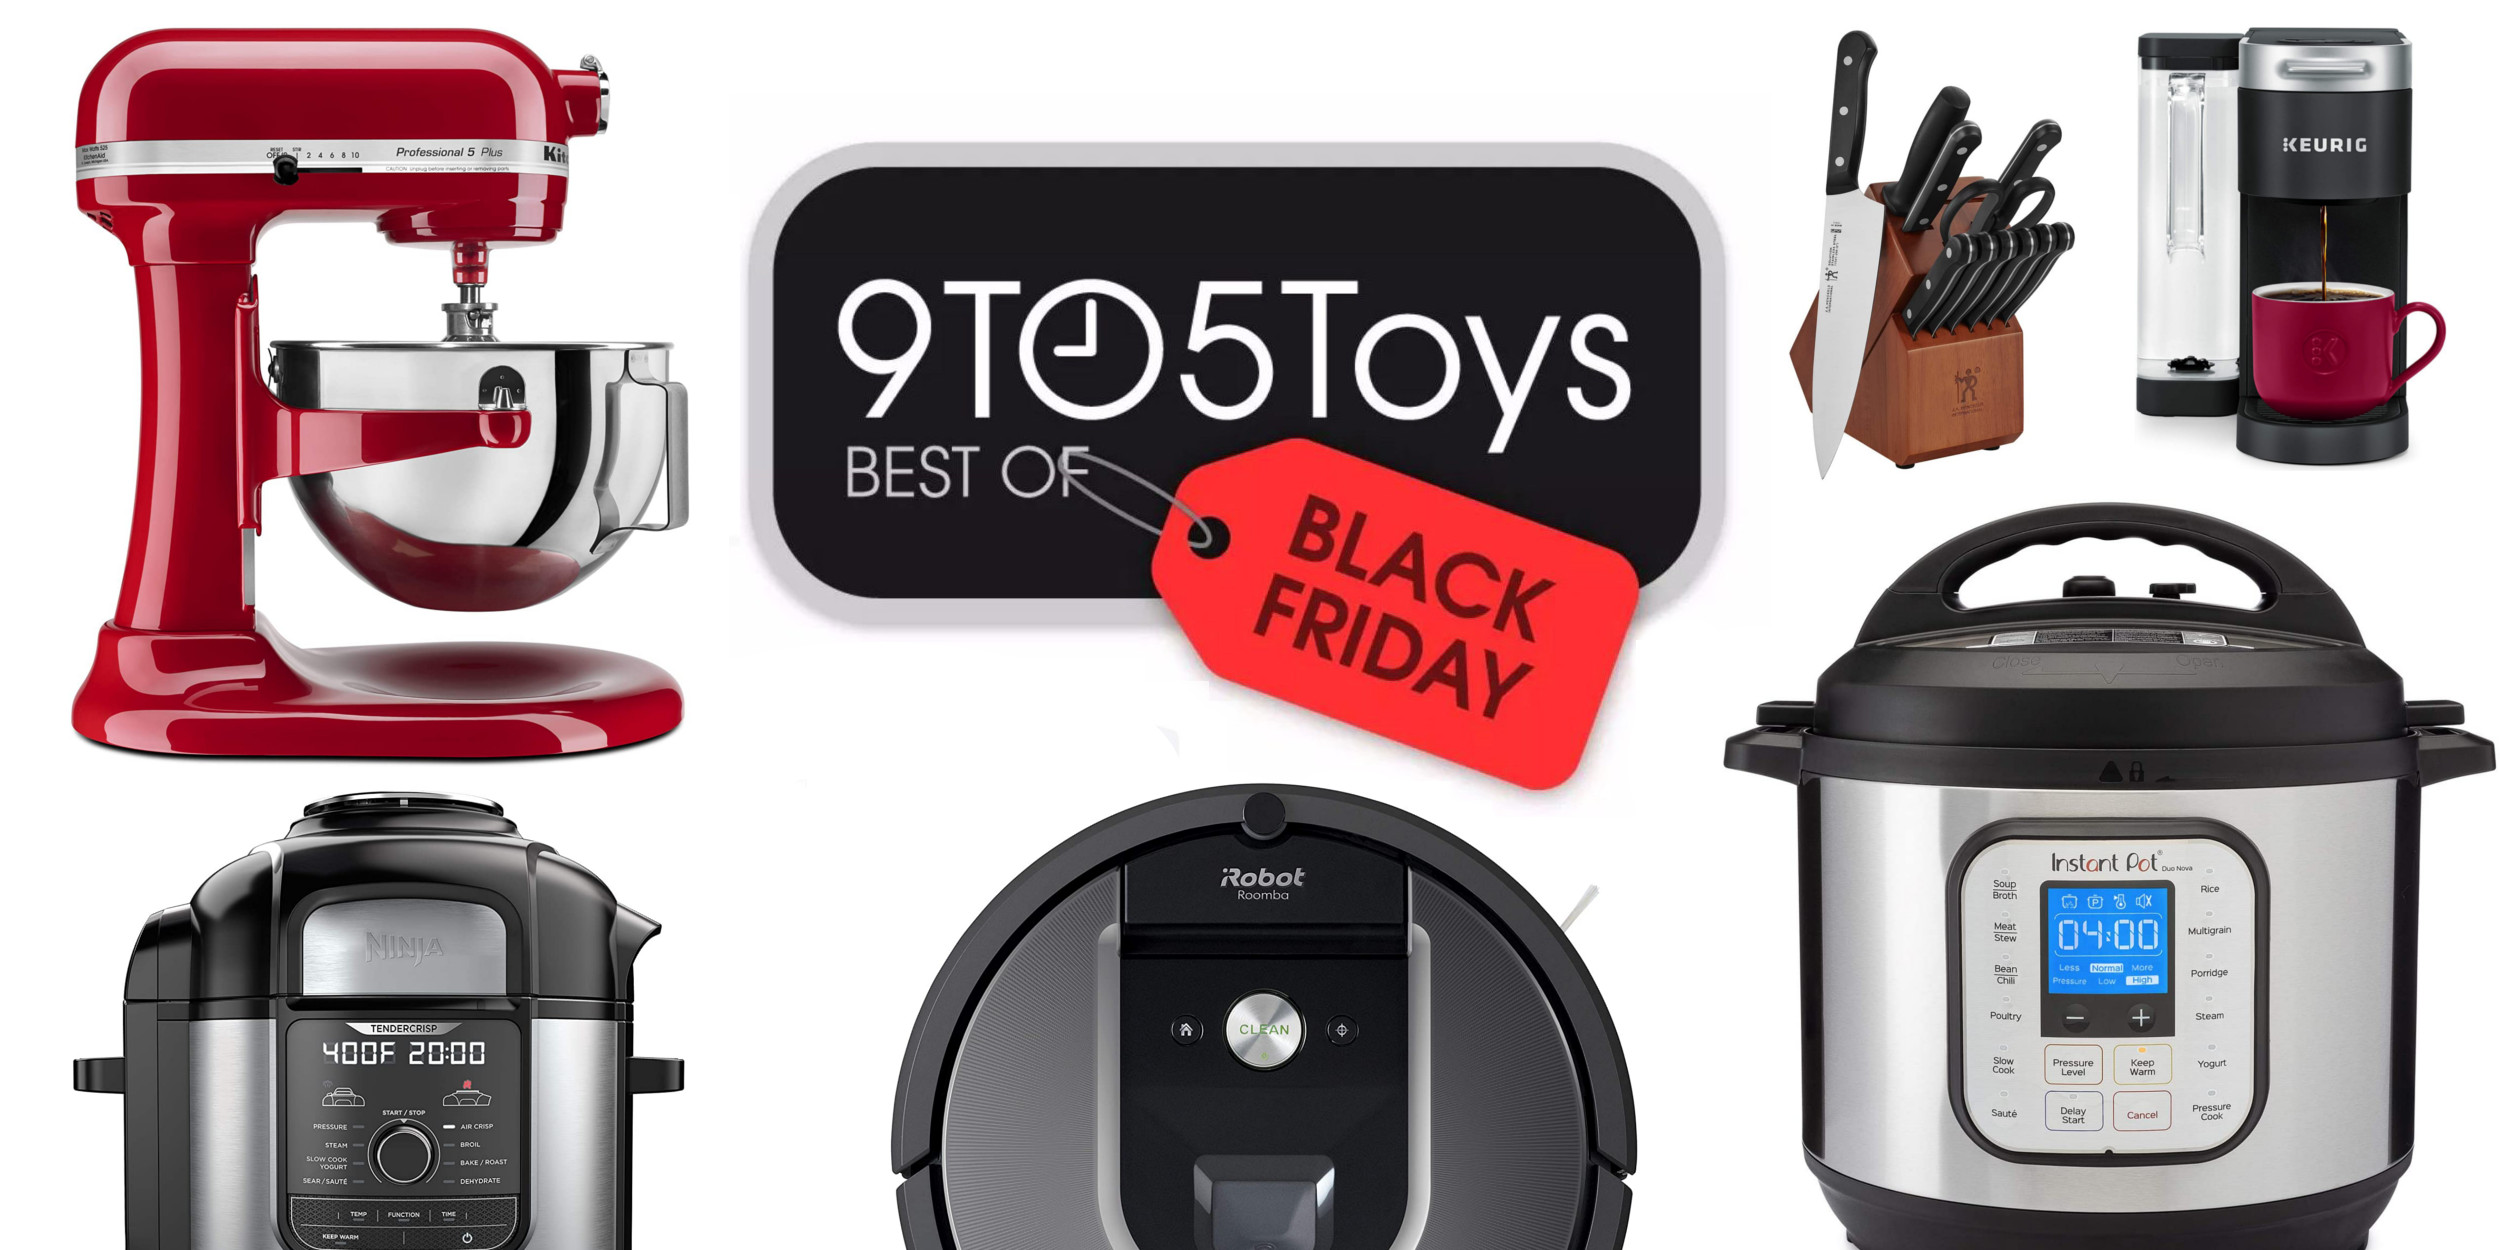 Best Black Friday home goods deals Instant Pot, Ninja, more 9to5Toys